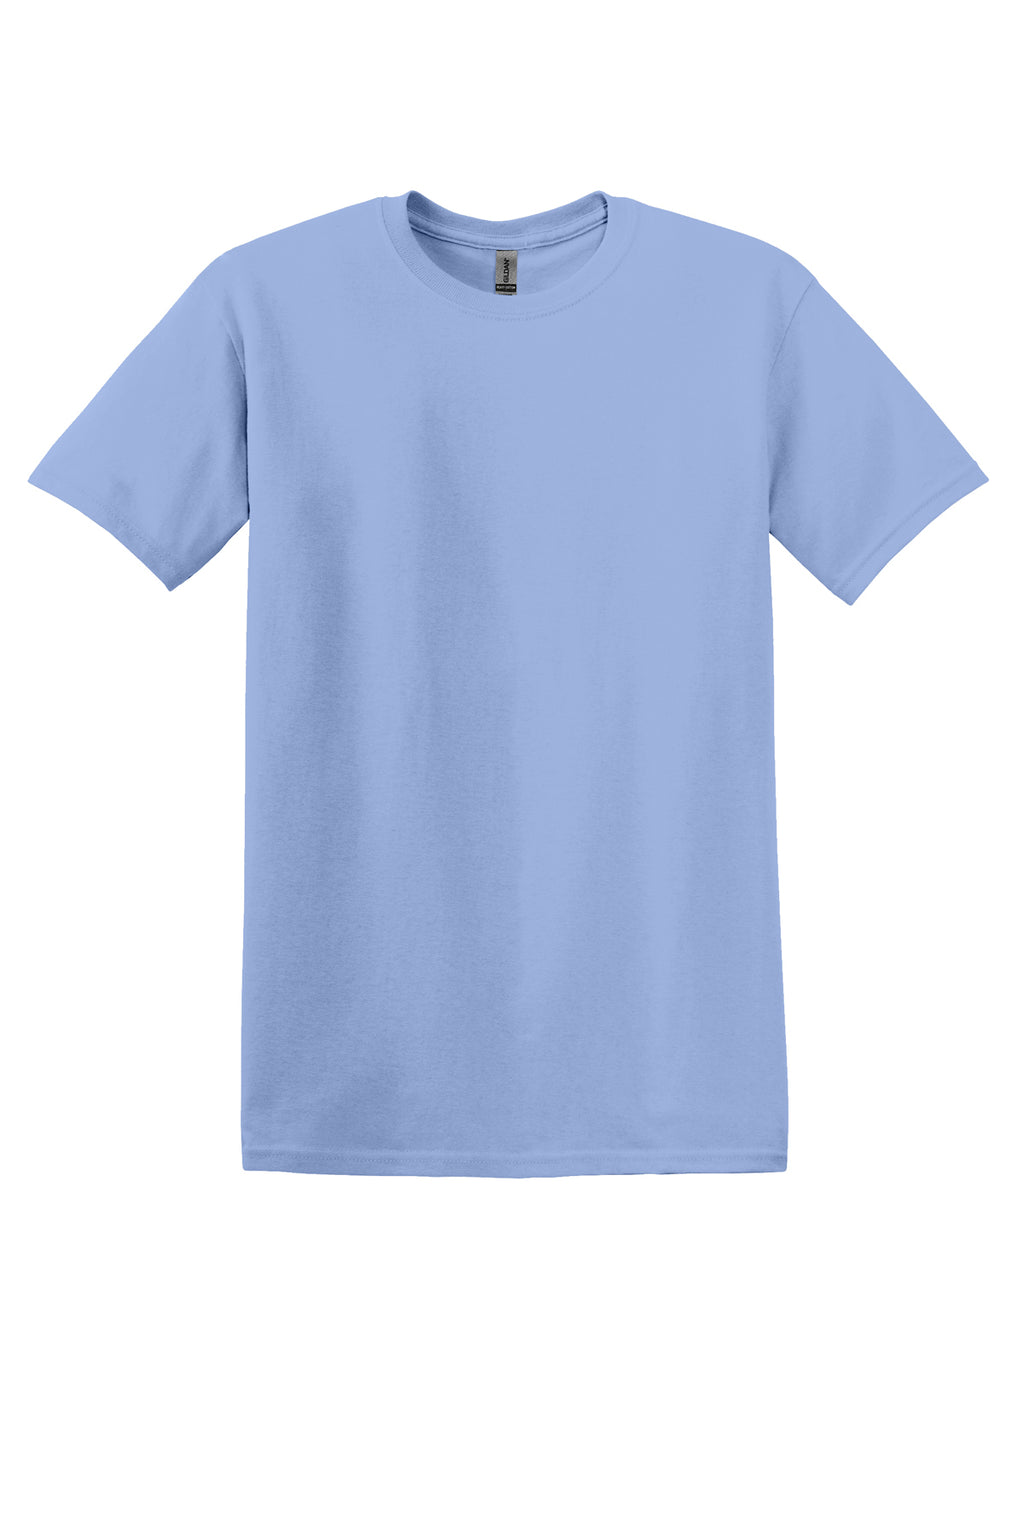 Gildan Mens/Unisex S/S Shirts Carolina Blue